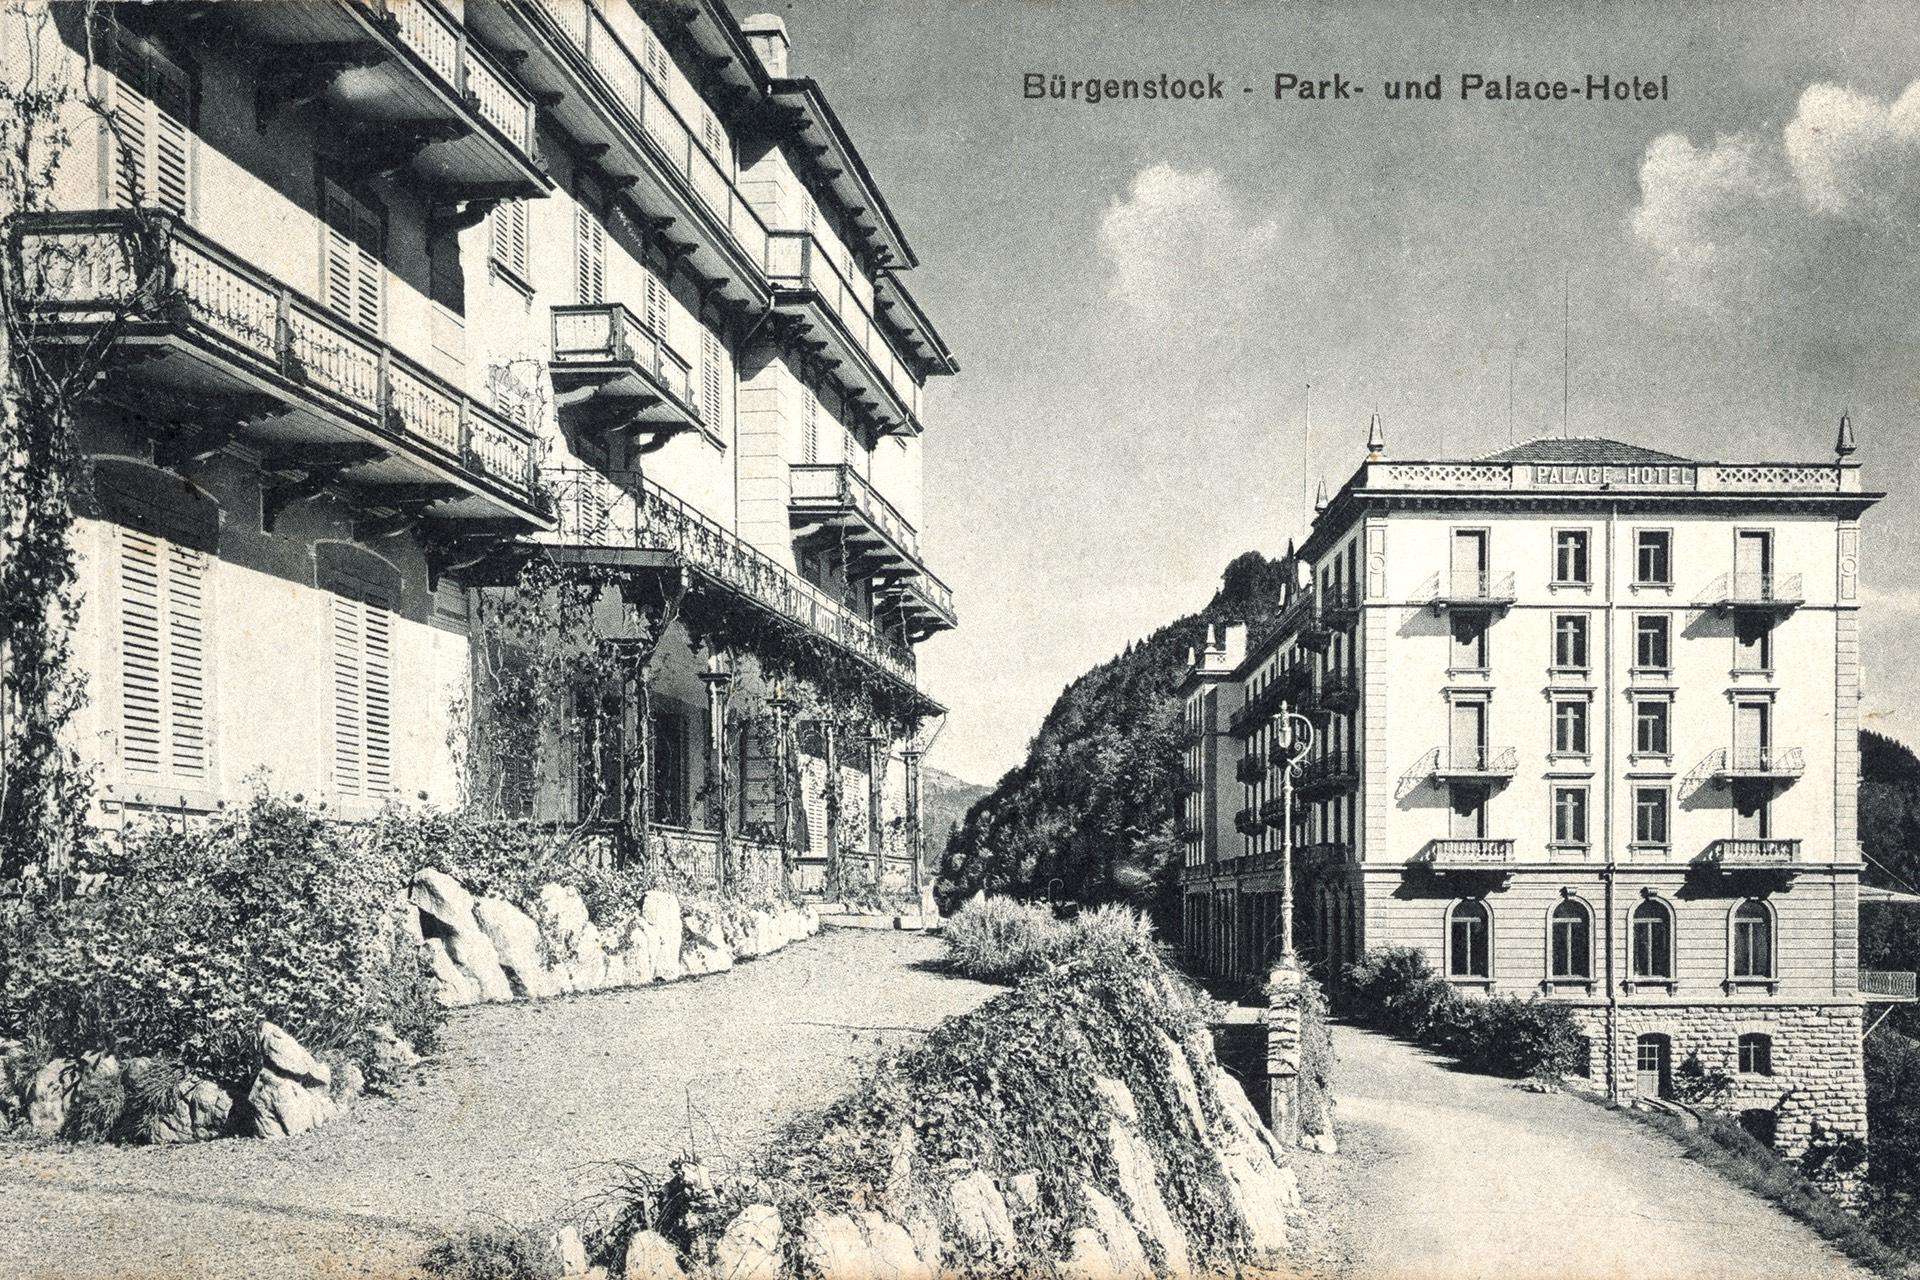 His next hotels on Bürgenstock: Hotel Palace Bürgenstock and the Park Hotel.